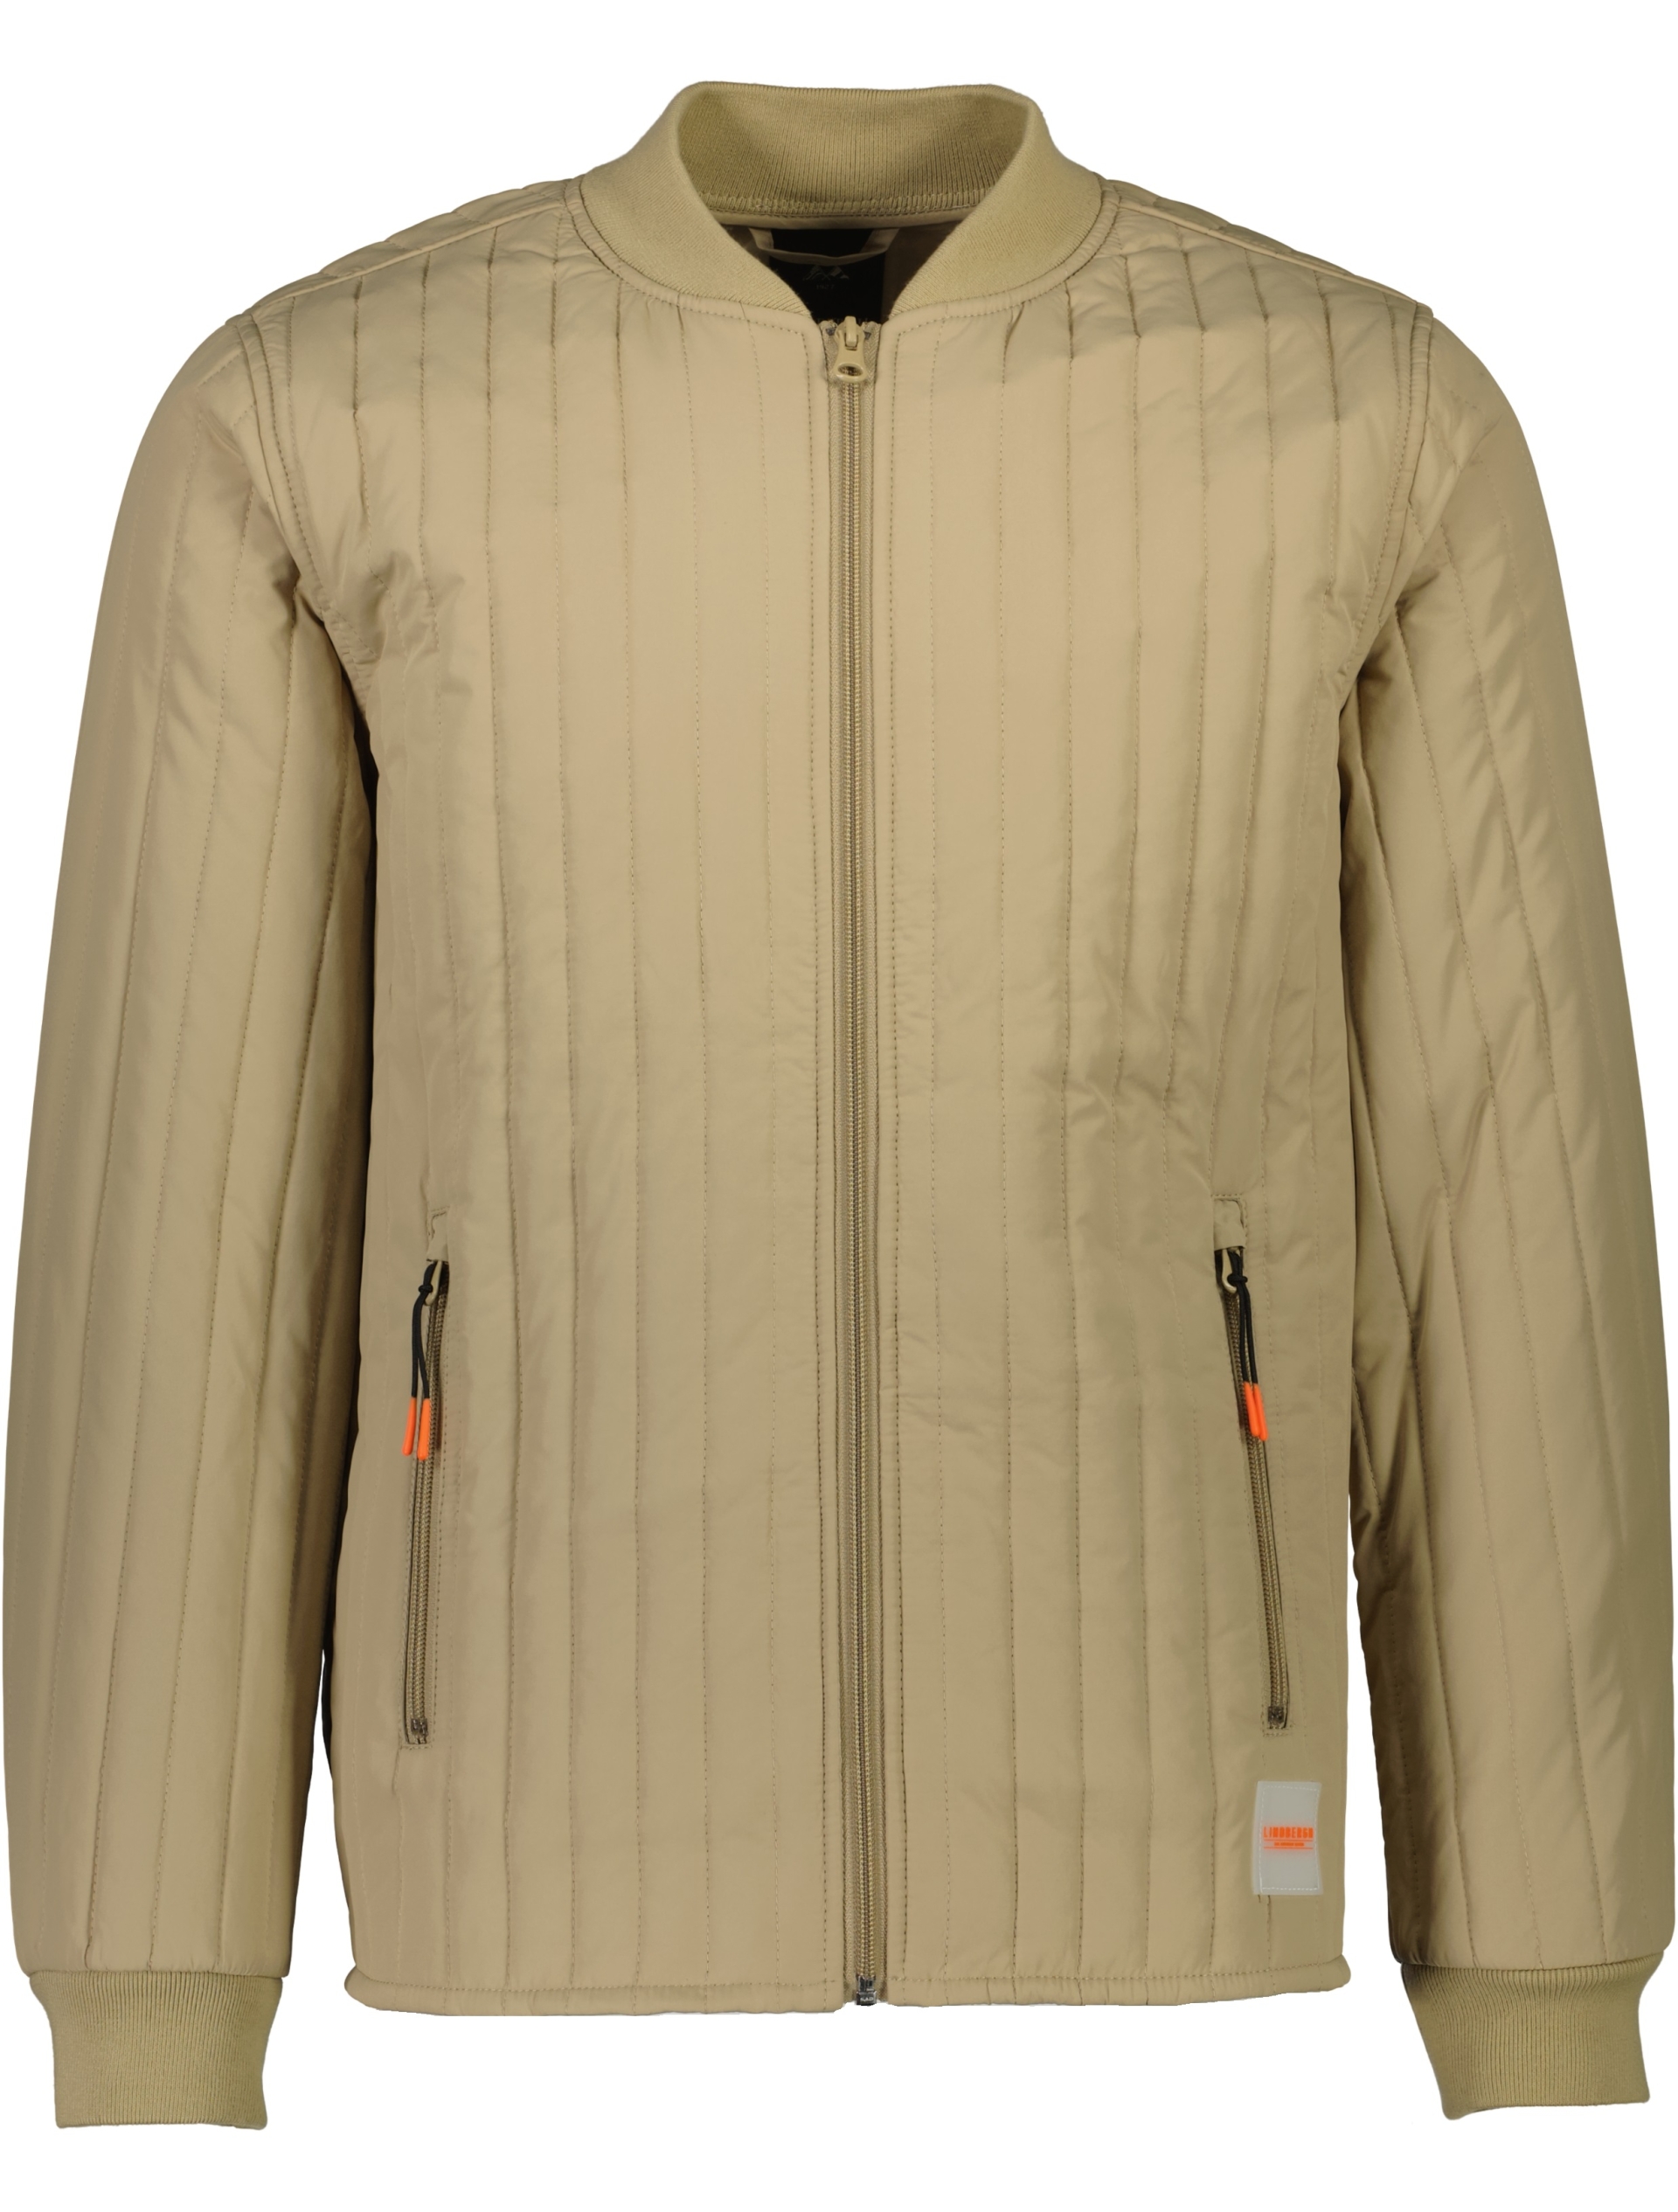 Lindbergh Casual jacket sand / dk sand